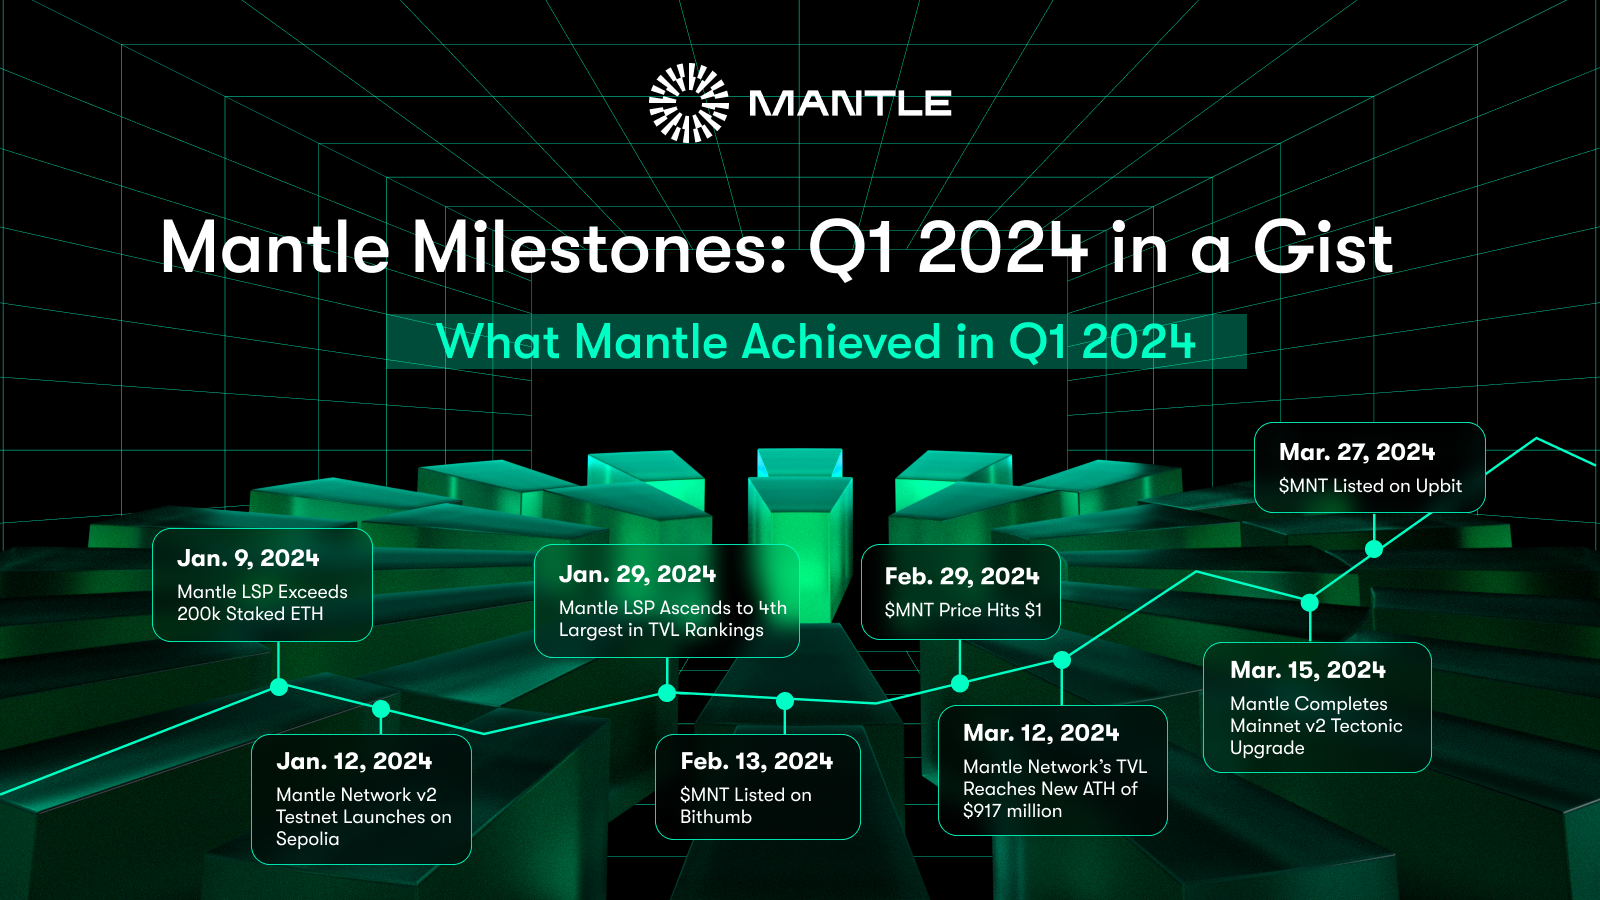  Mantle Milestones: Q1 2024 in a Gist